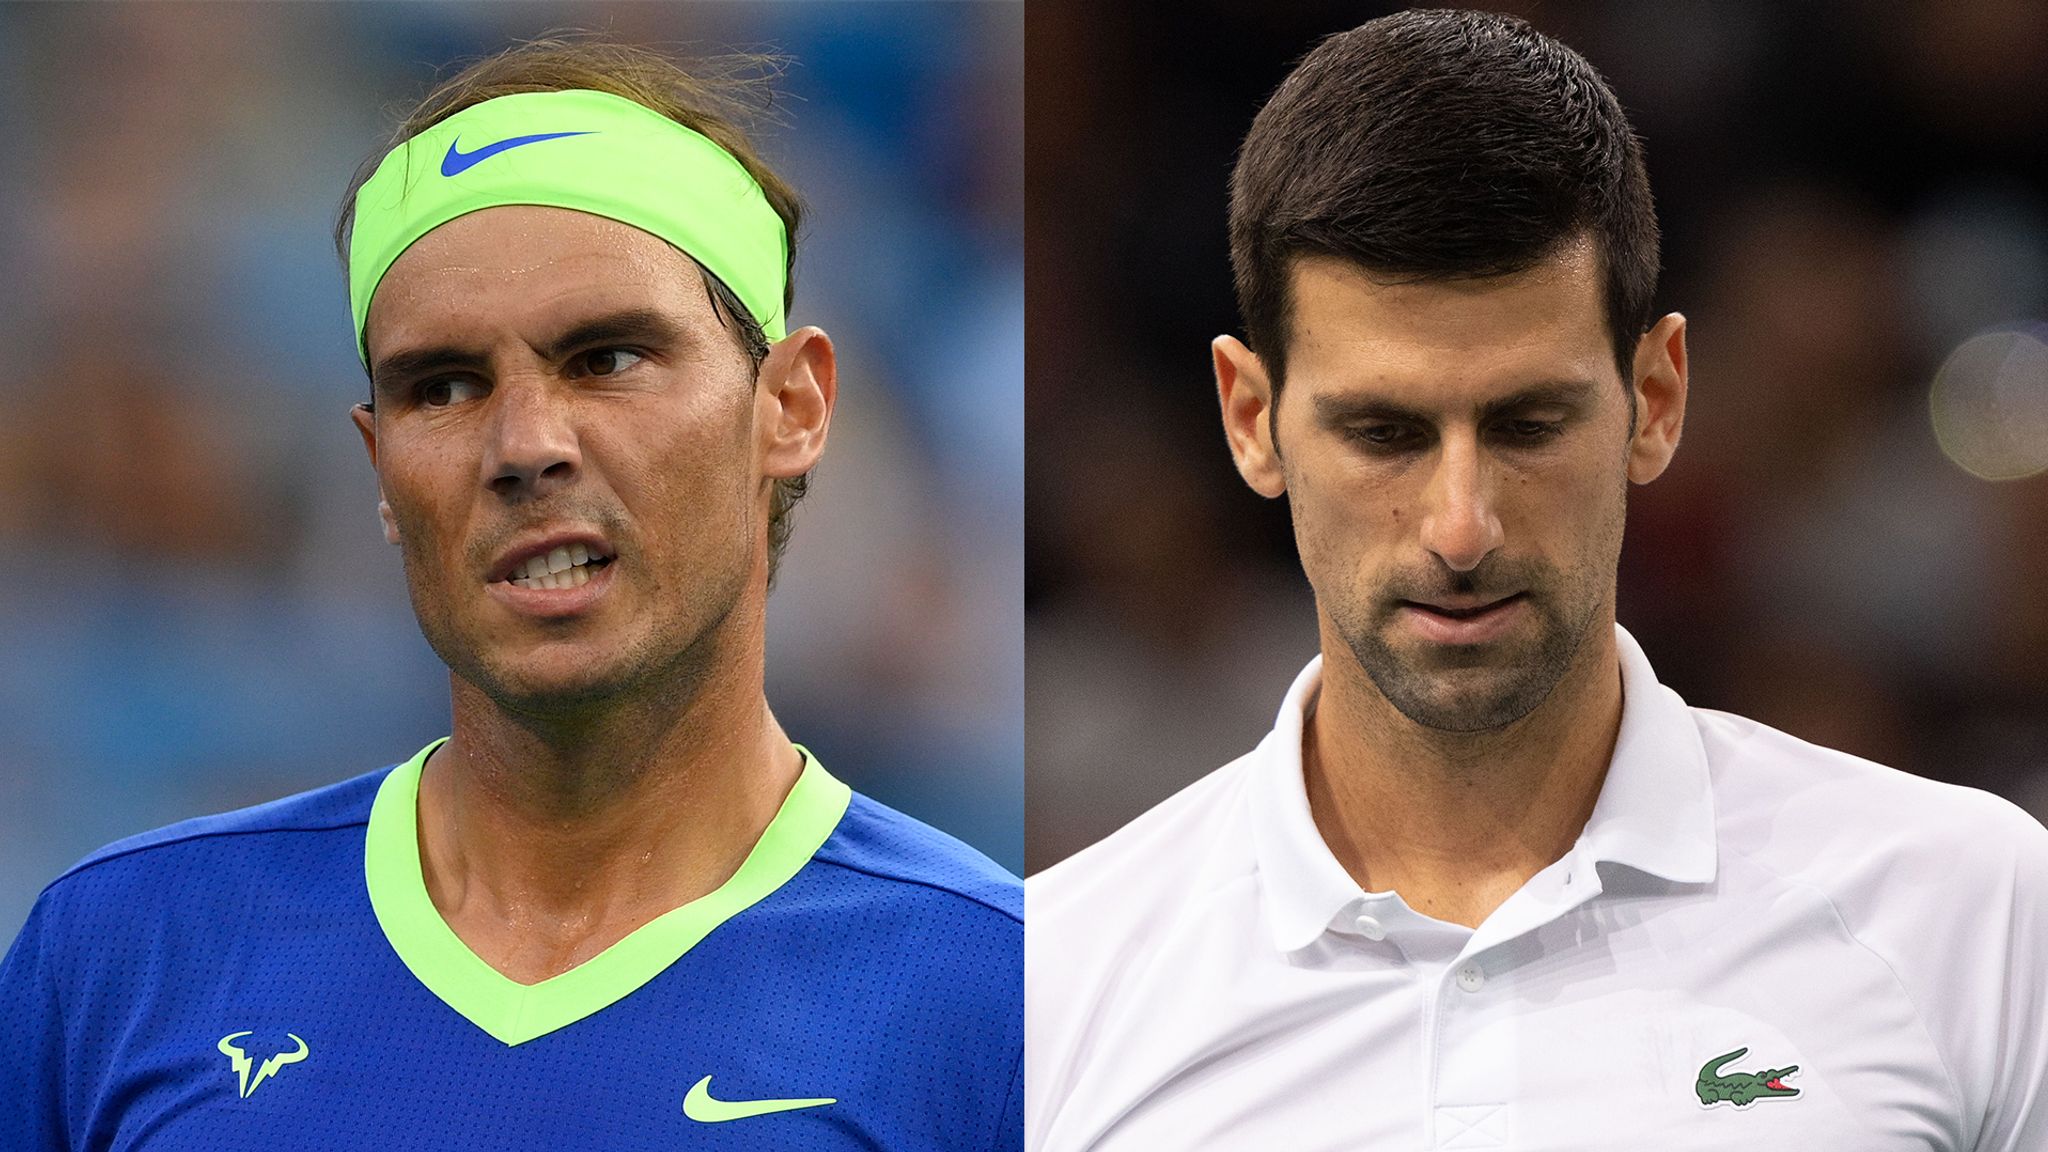 Madrid Open Men's Singles Draws: World No.1 Novak Djokovic likely to set up blockbuster semifinal clash against Rafael Nadal - Check Out 